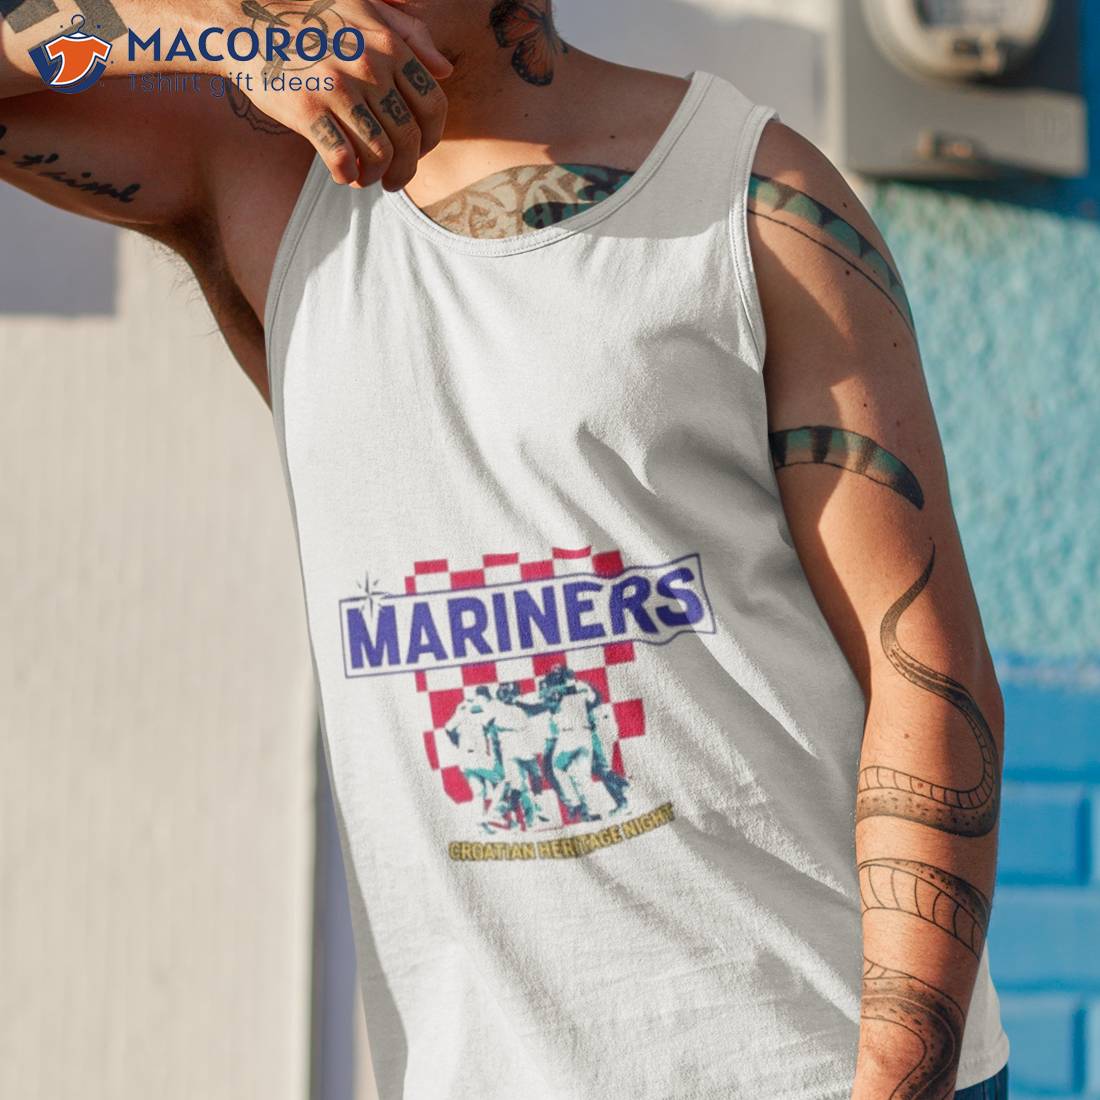 Mariners 2023 Croatian Heritage Themed Shirt